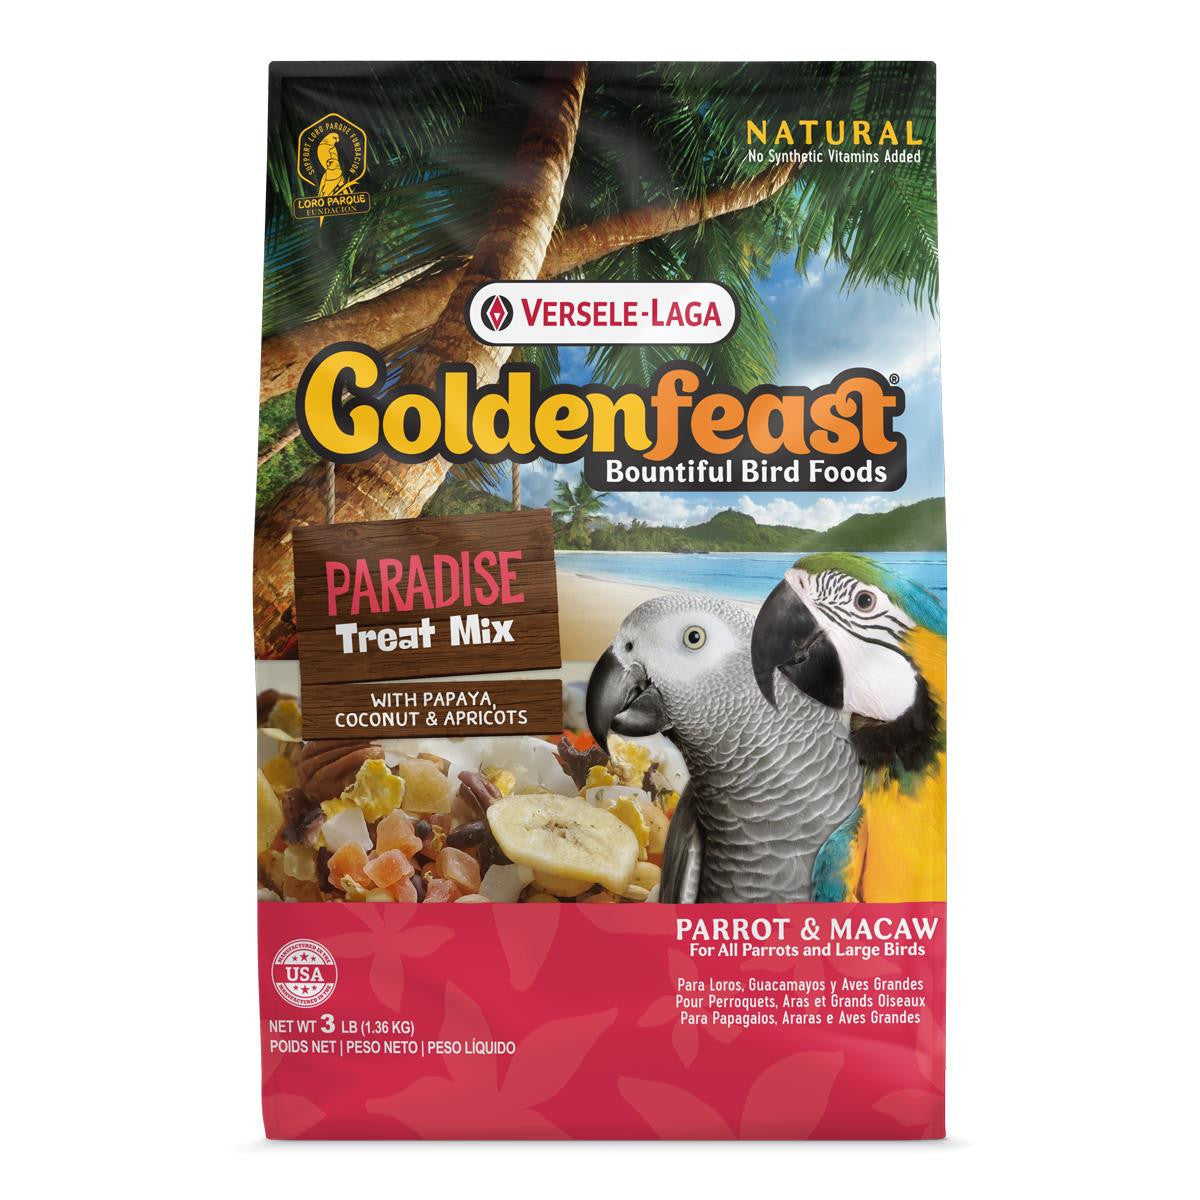 Goldenfeast Paradise Treat Mix Bird Food 6 / 3 lb 046706822607